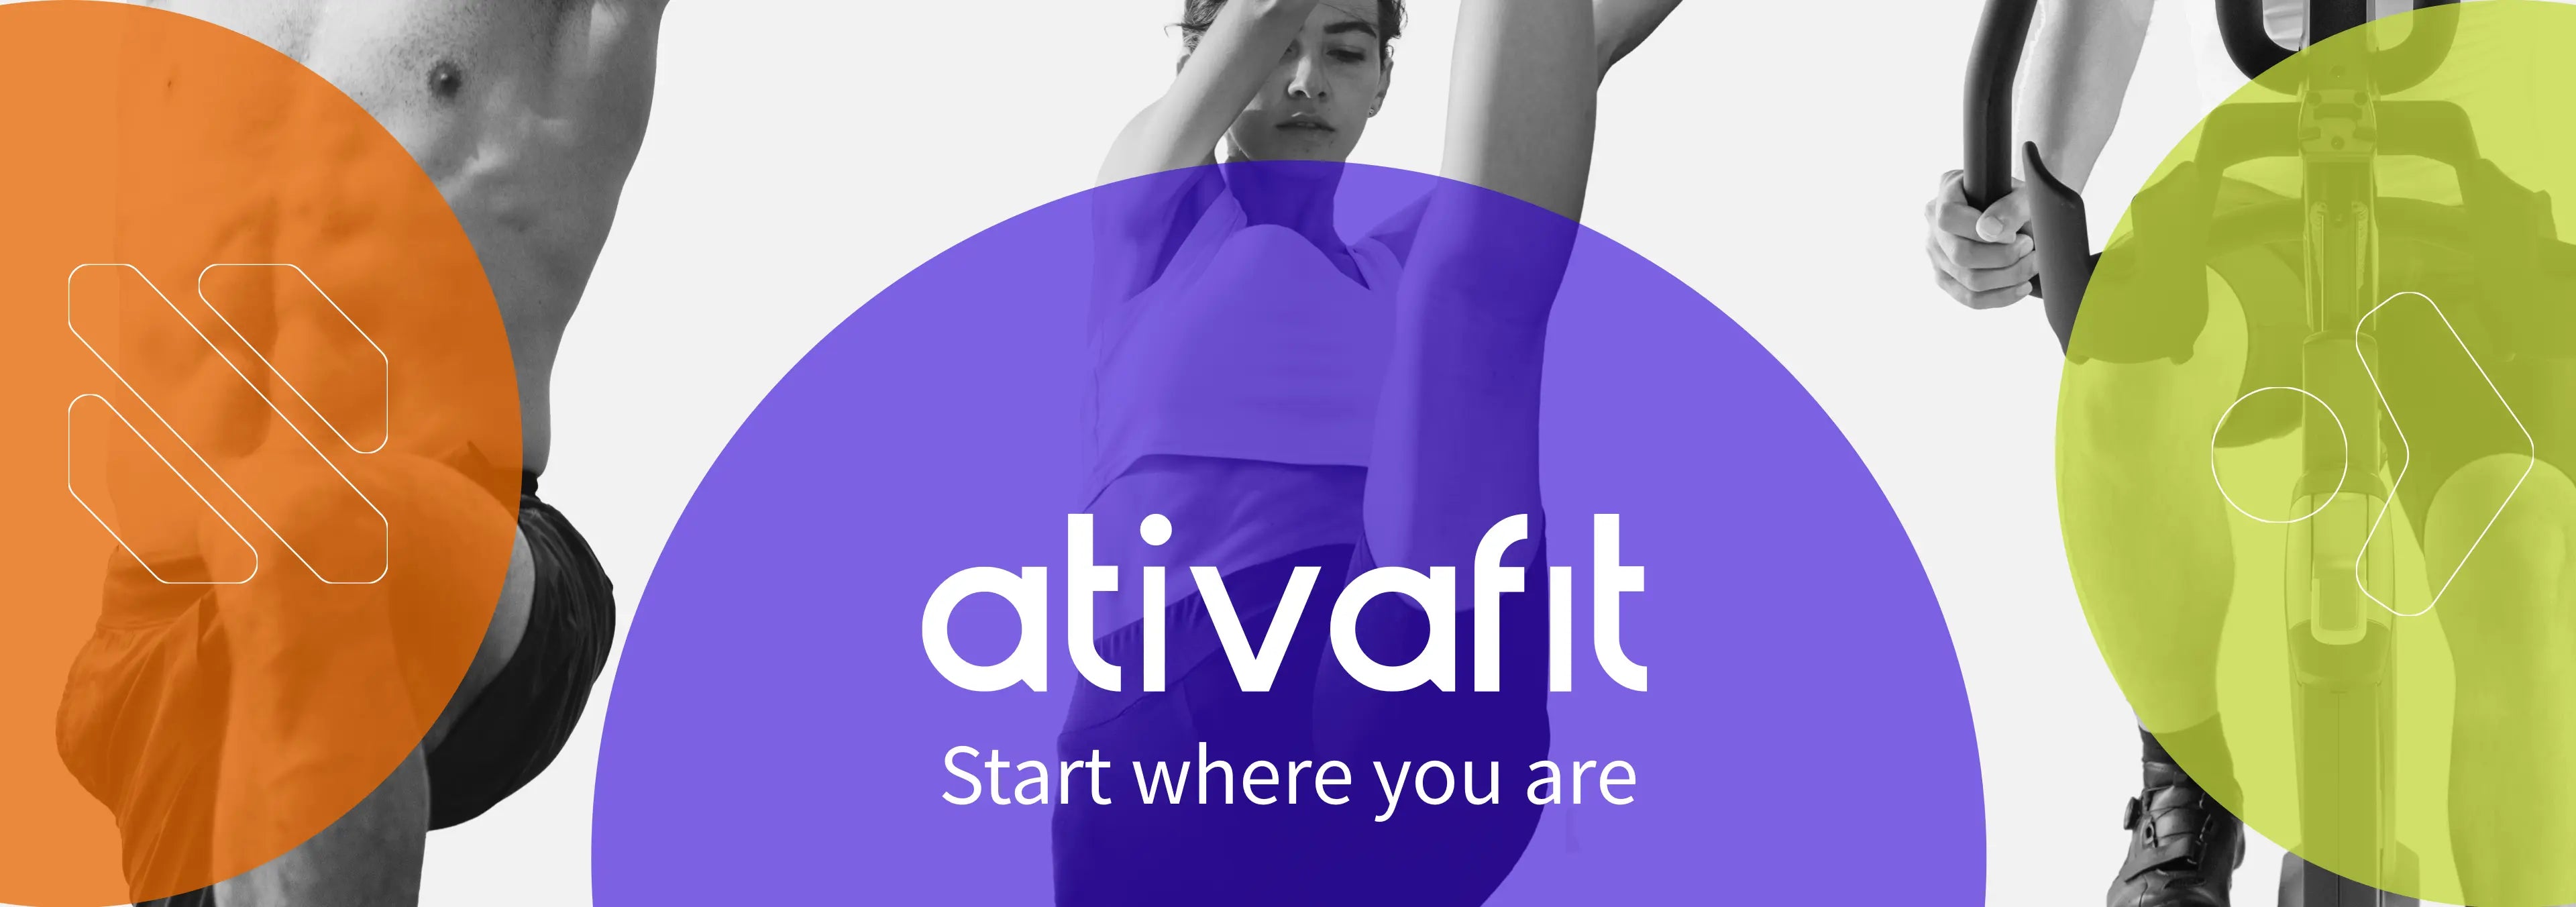 Ativafit - Start Where You are